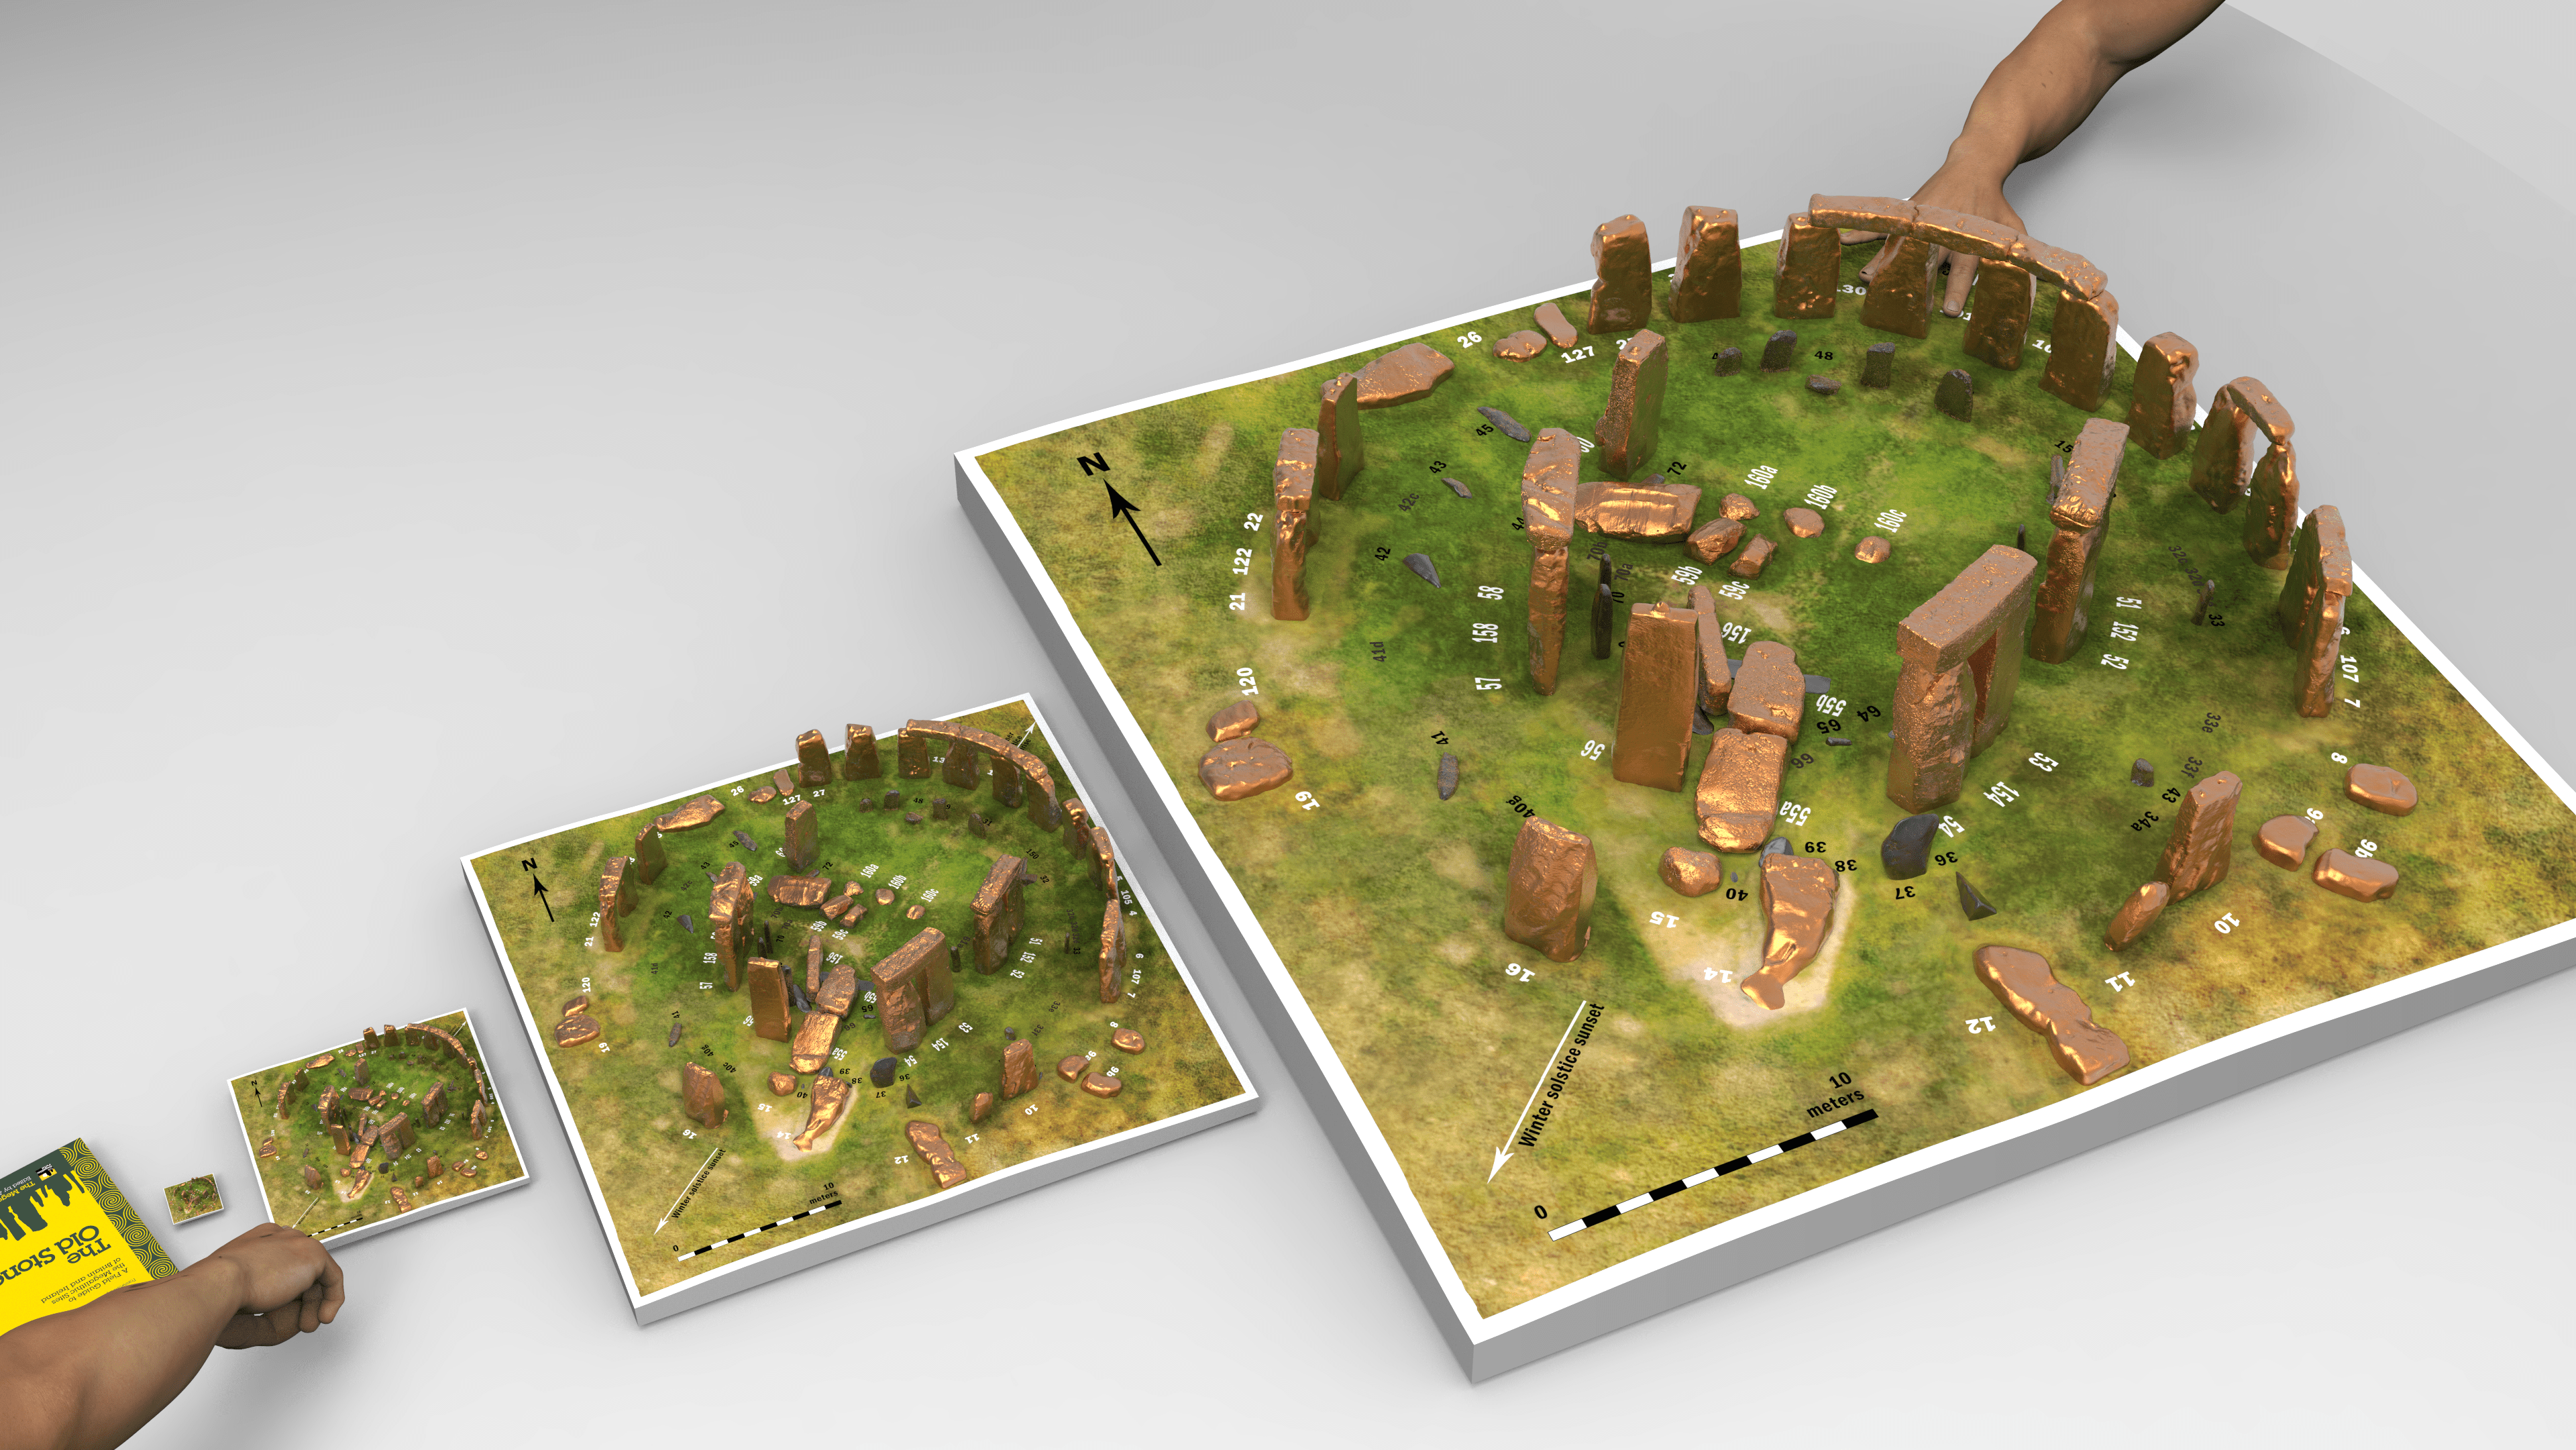 Stonehenge model replica four sizes of models